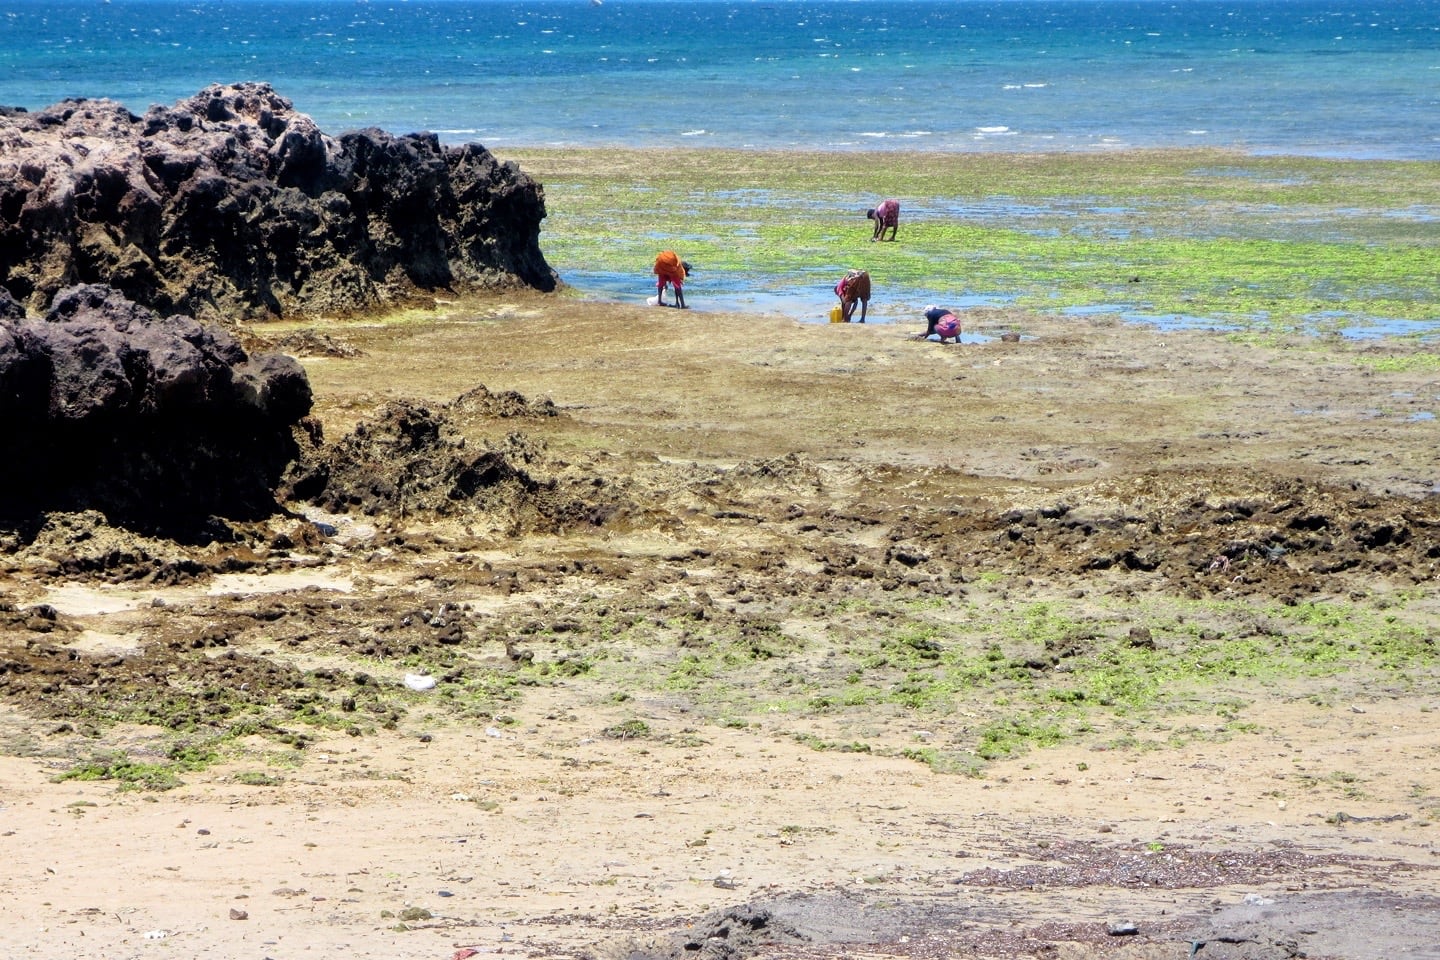 Mozambique Island seaweed harvesting